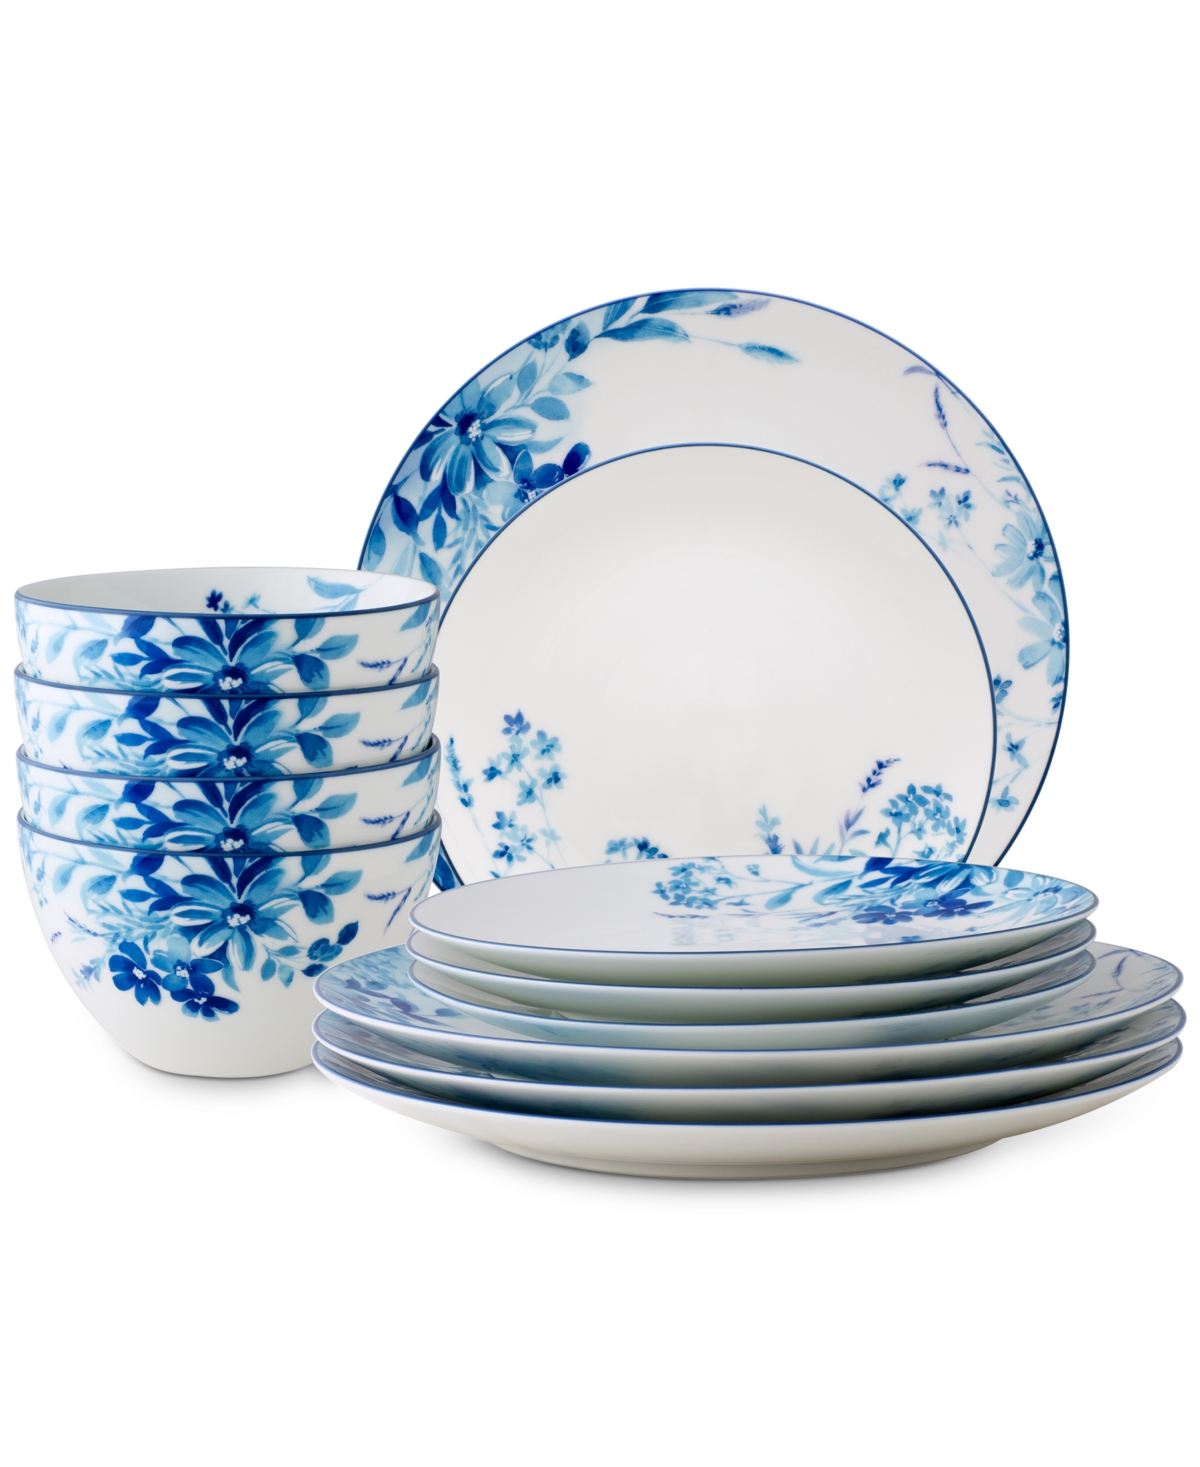 Blossom Road 12-Pc. Dinnerware Set - White/blue